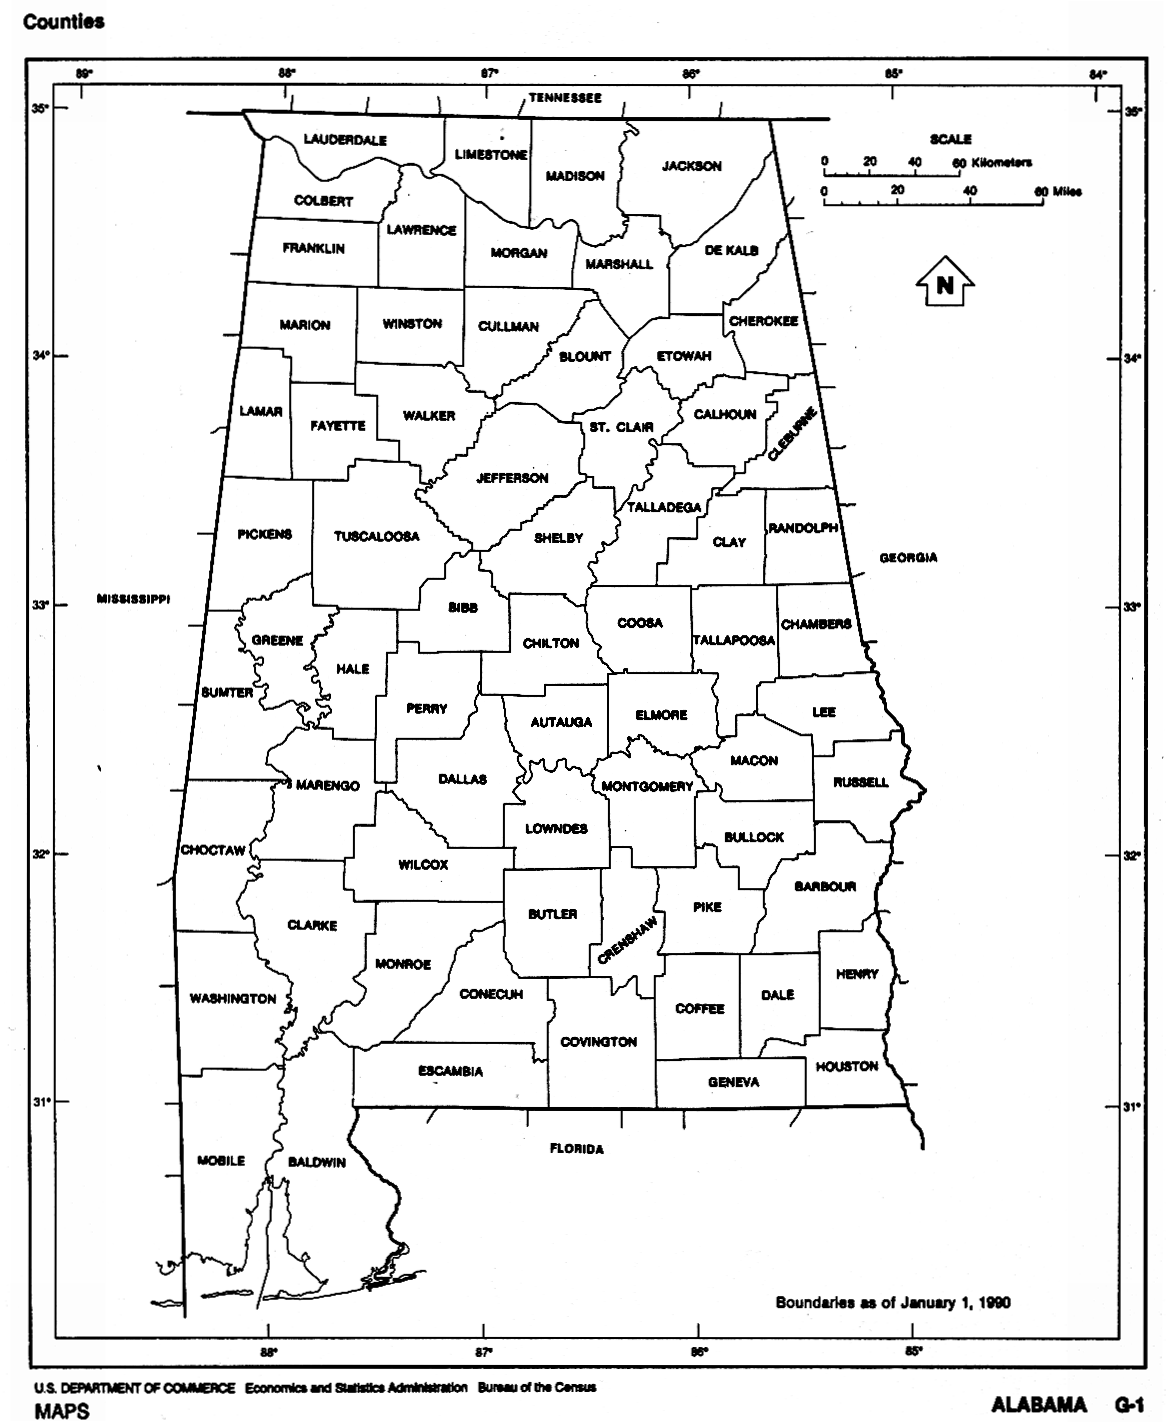 Counties Map of Alabama